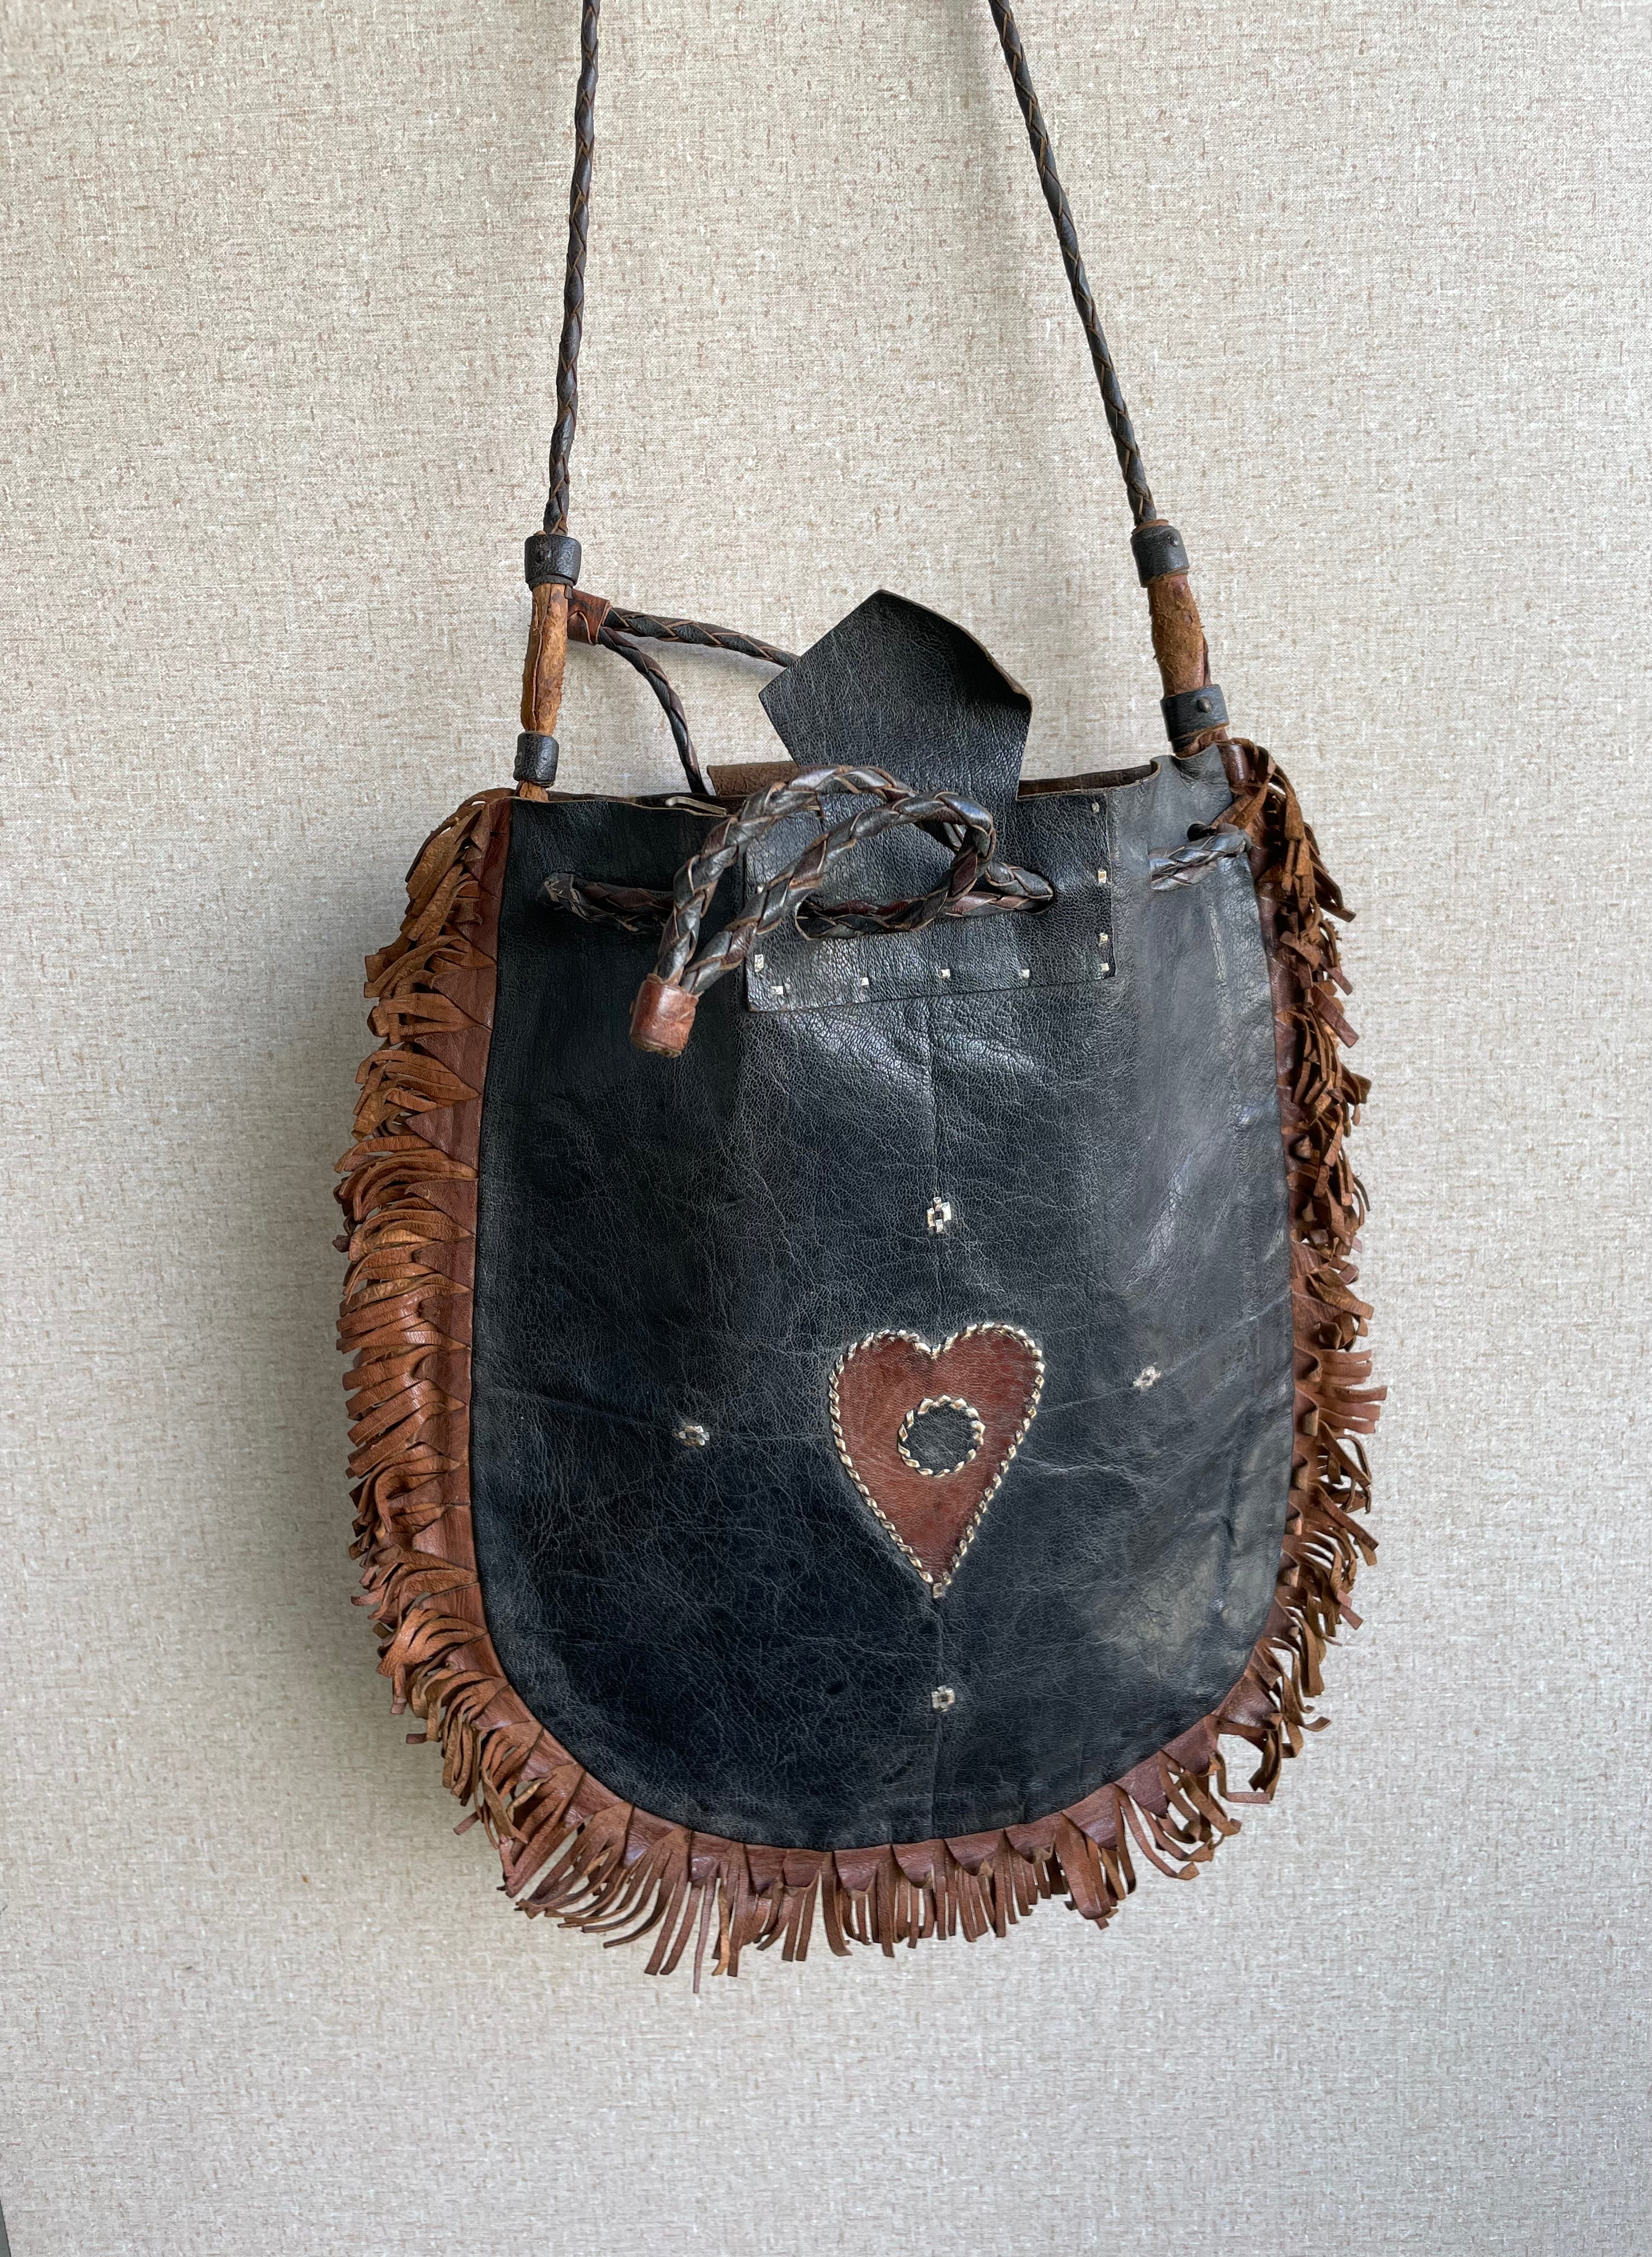 Handcrafted Bags - African Art - Accessories - Women - Handbag -  Shoulder - Leather - Tuareg - Vintage